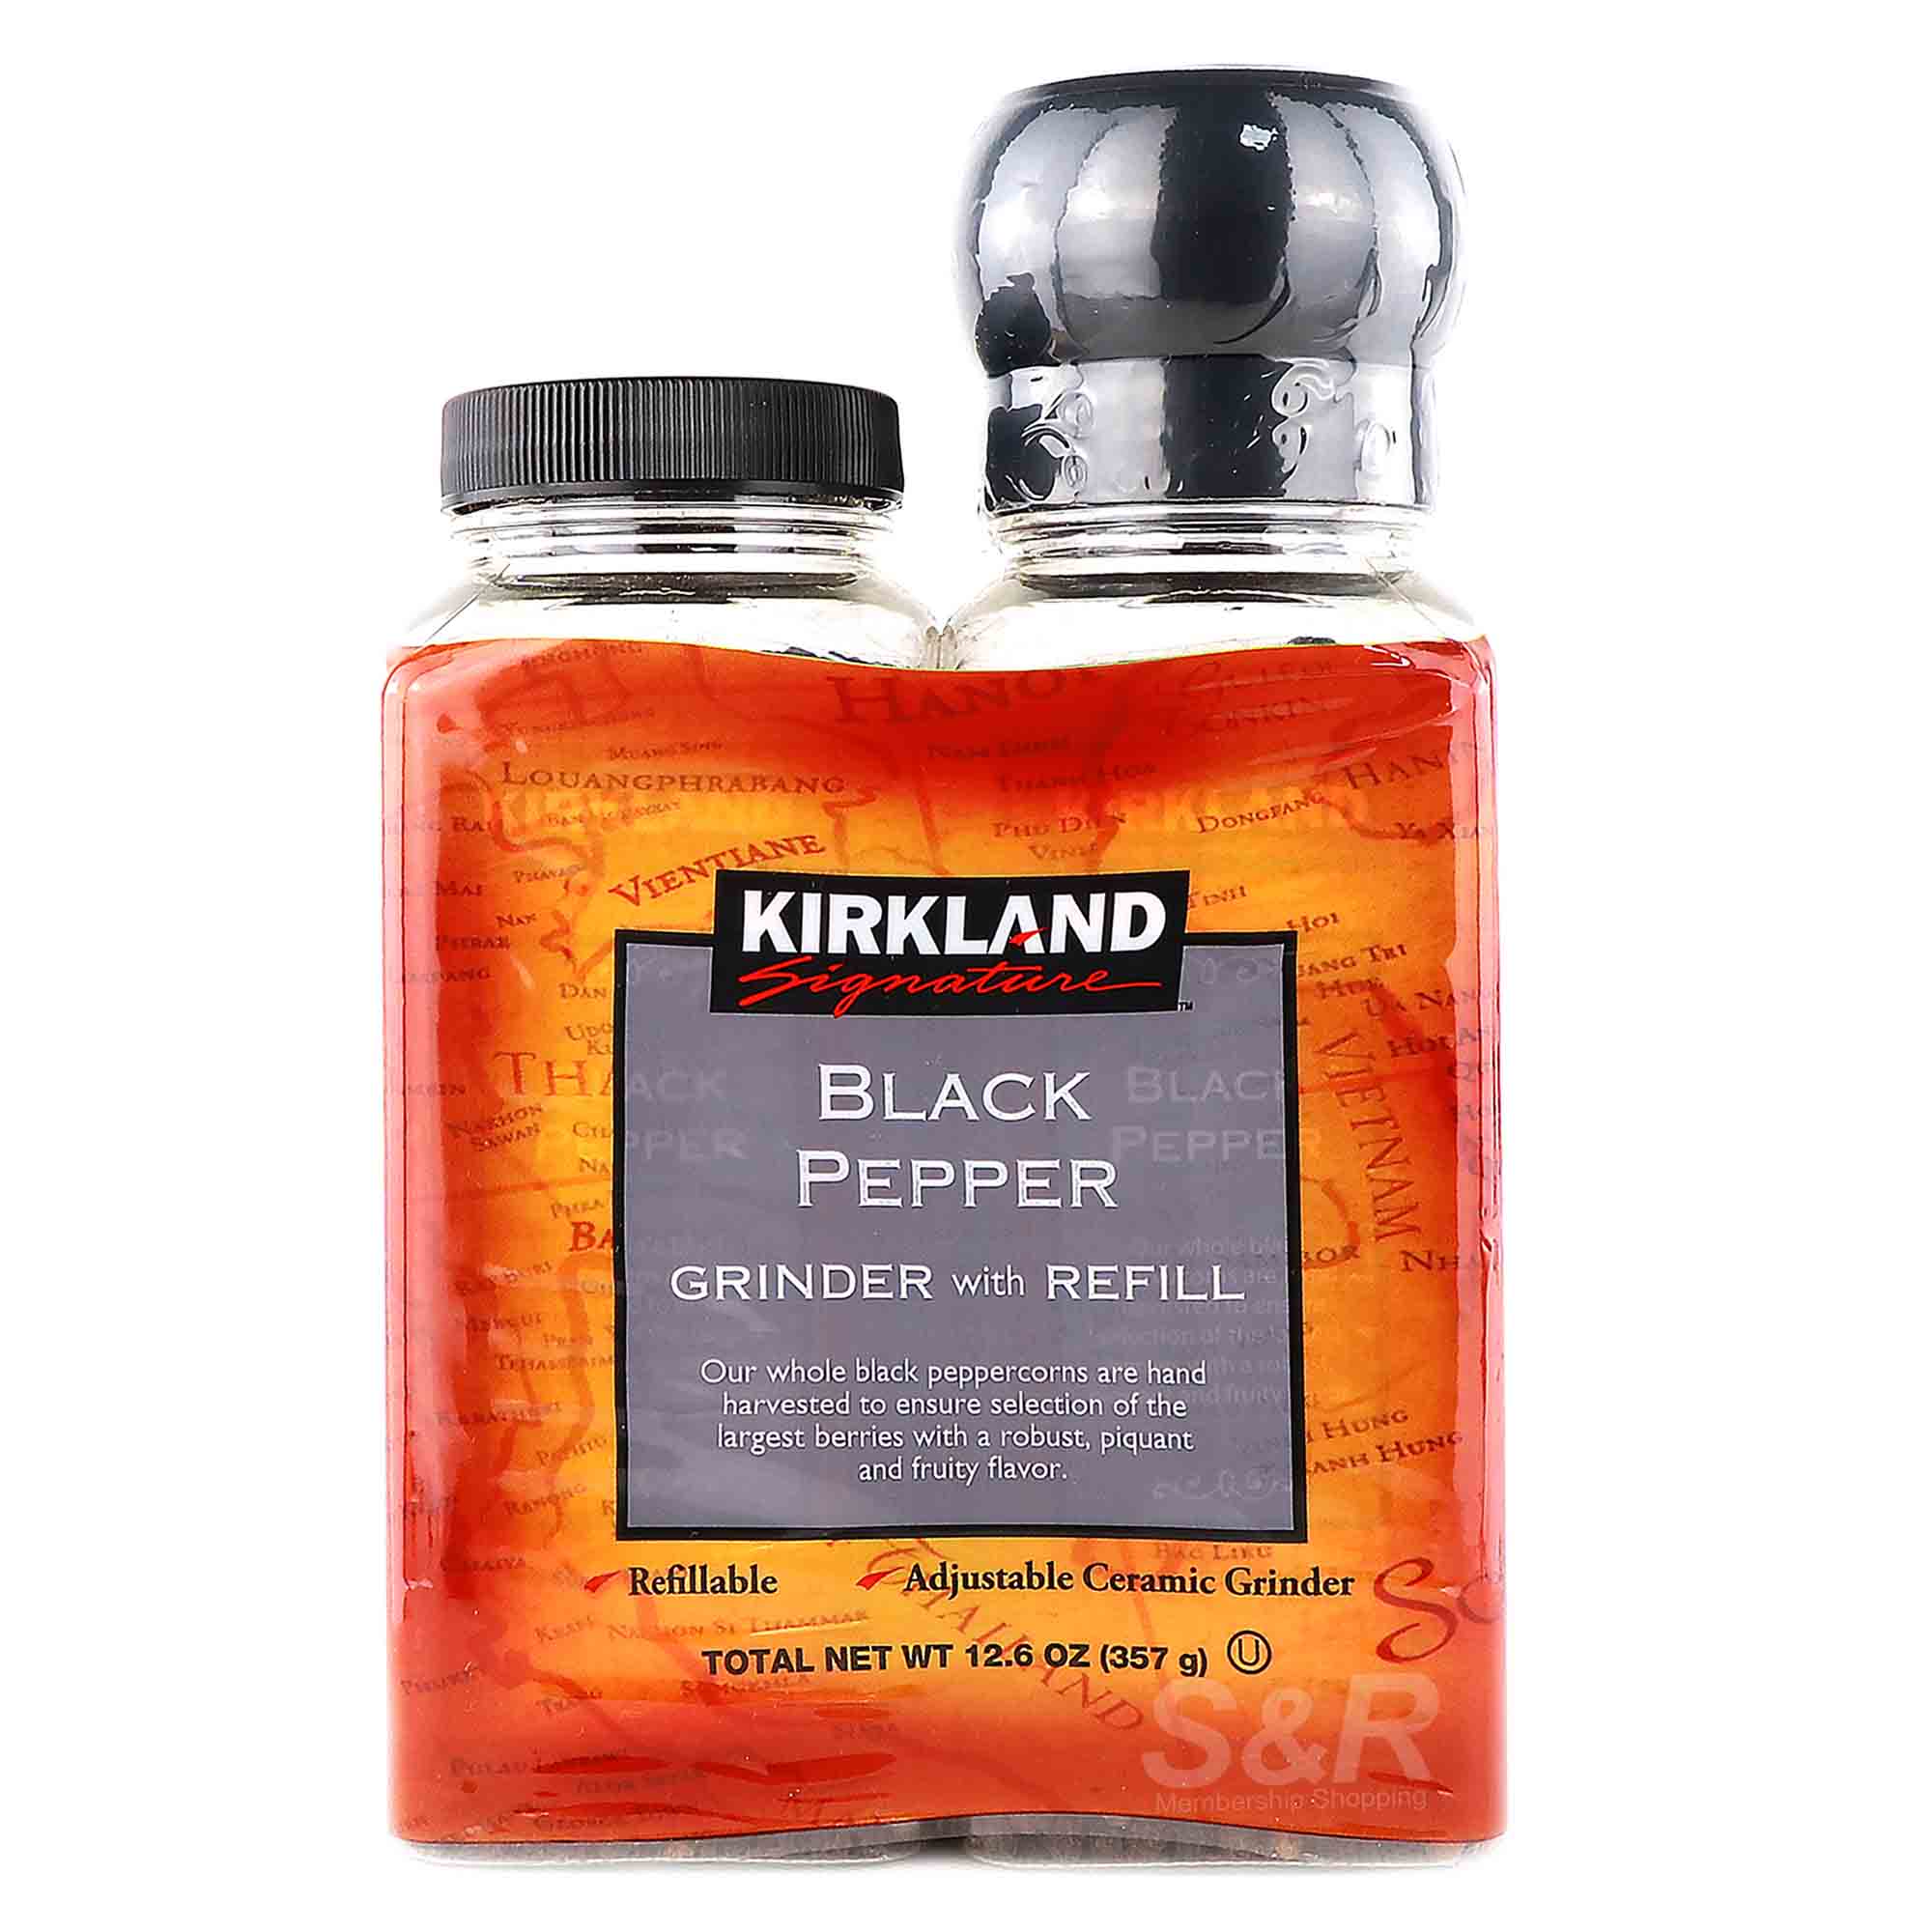 Kirkland Signature Black Pepper Grinder with Refill 357g